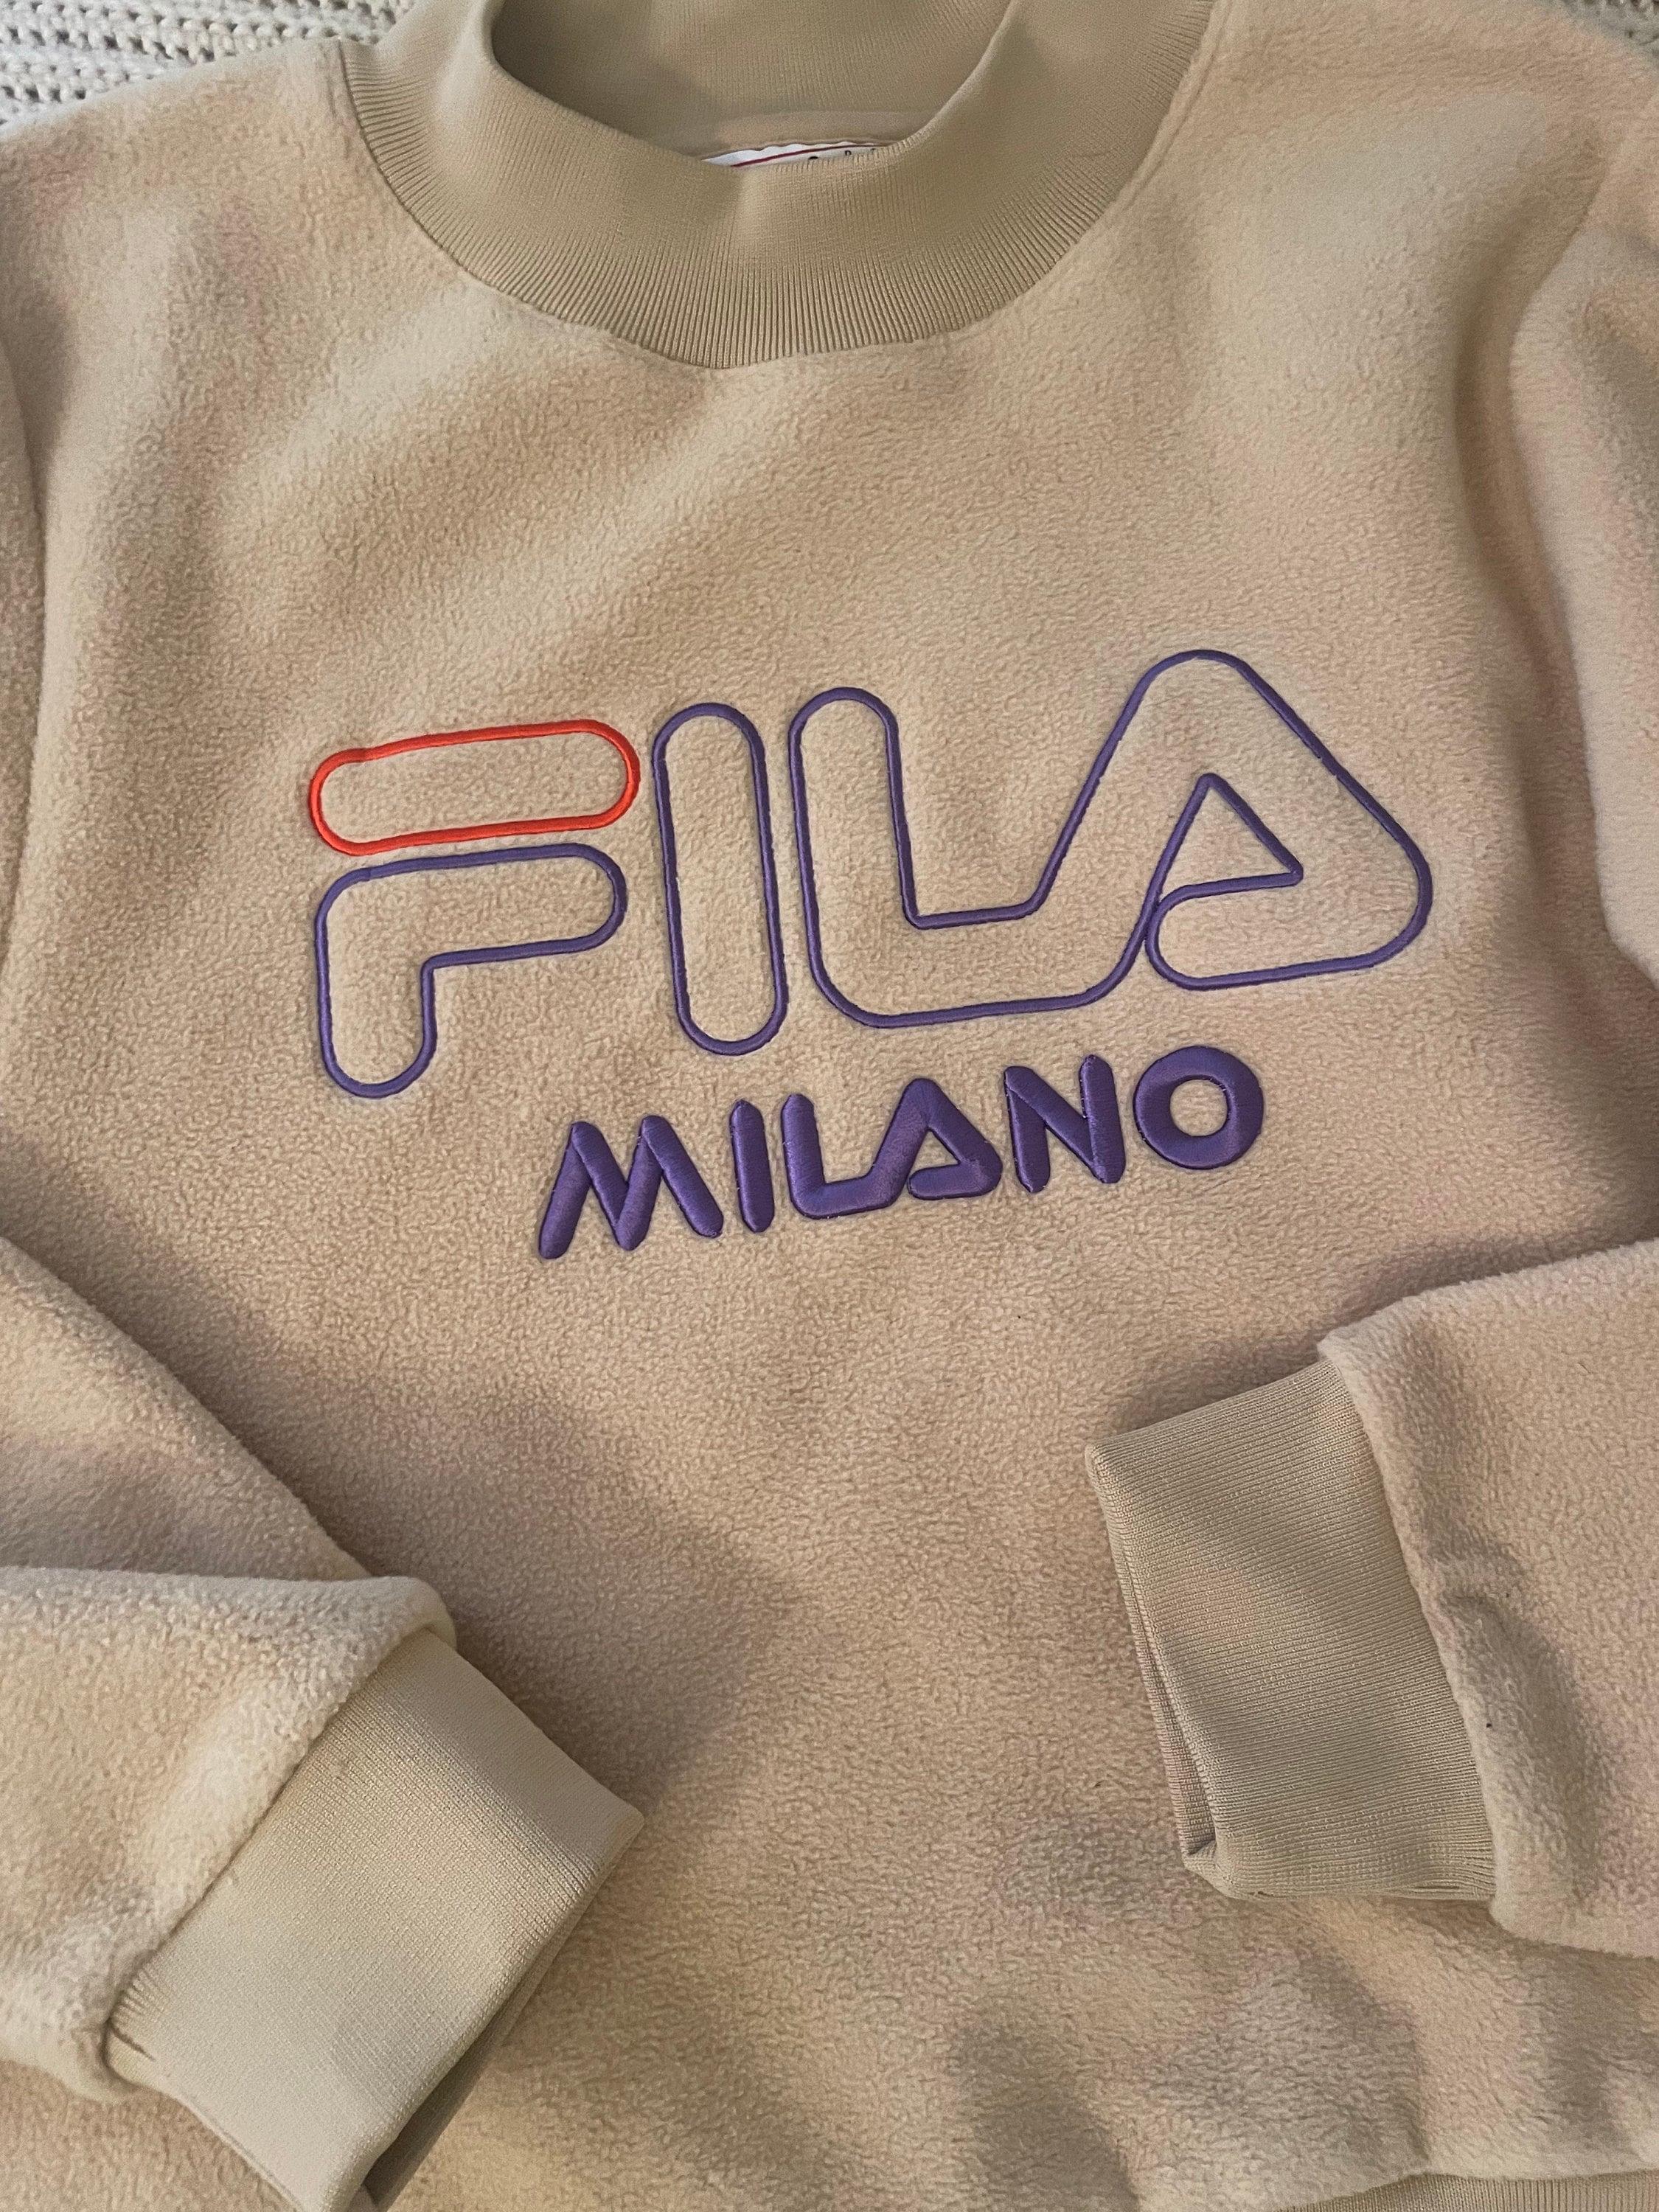 Retro FLEECE Milano Sweater / Fleece Long Sleeve / - Etsy